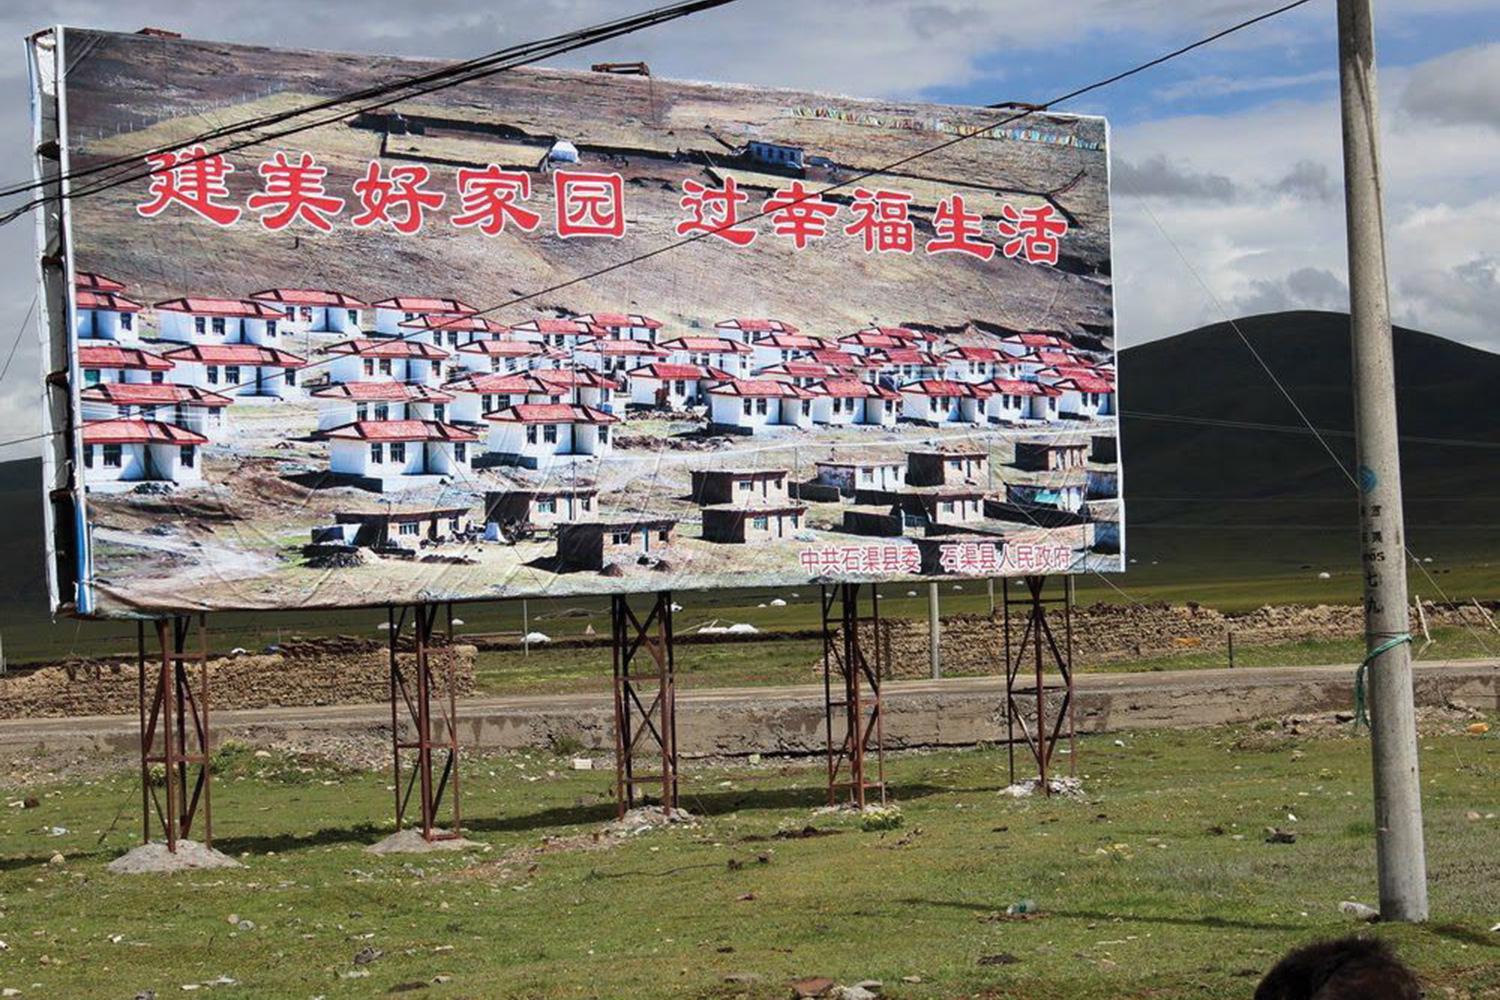 A propaganda billboard featuring a "New Socialist Village" in Sershul (Shiqu) County, Sichuan Province.  The billboard reads: "Build Beautiful Homeland, Live a Happy Life"